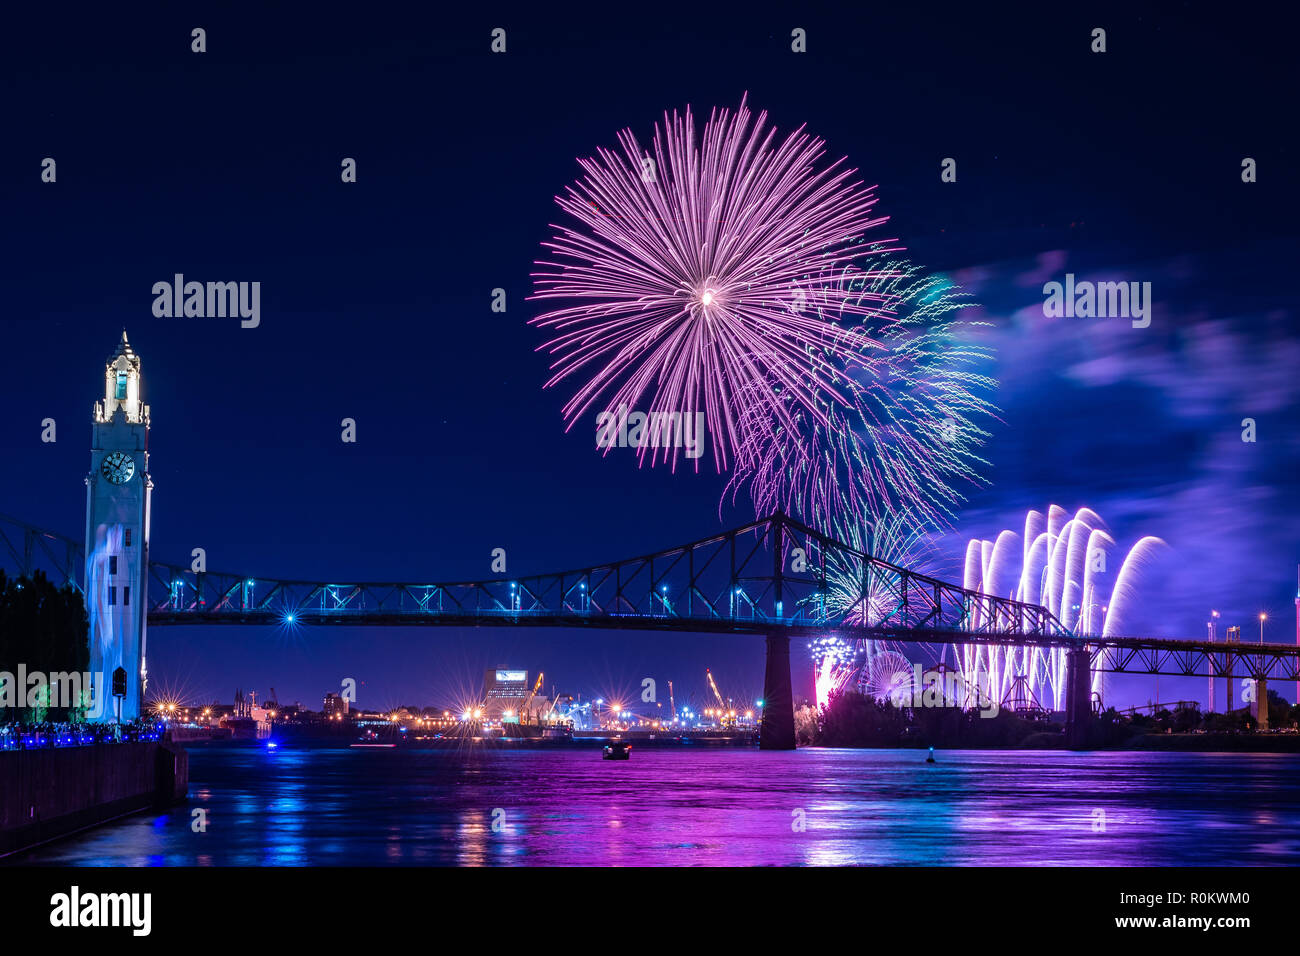 Fireworks display over a city bridge Stock Photo